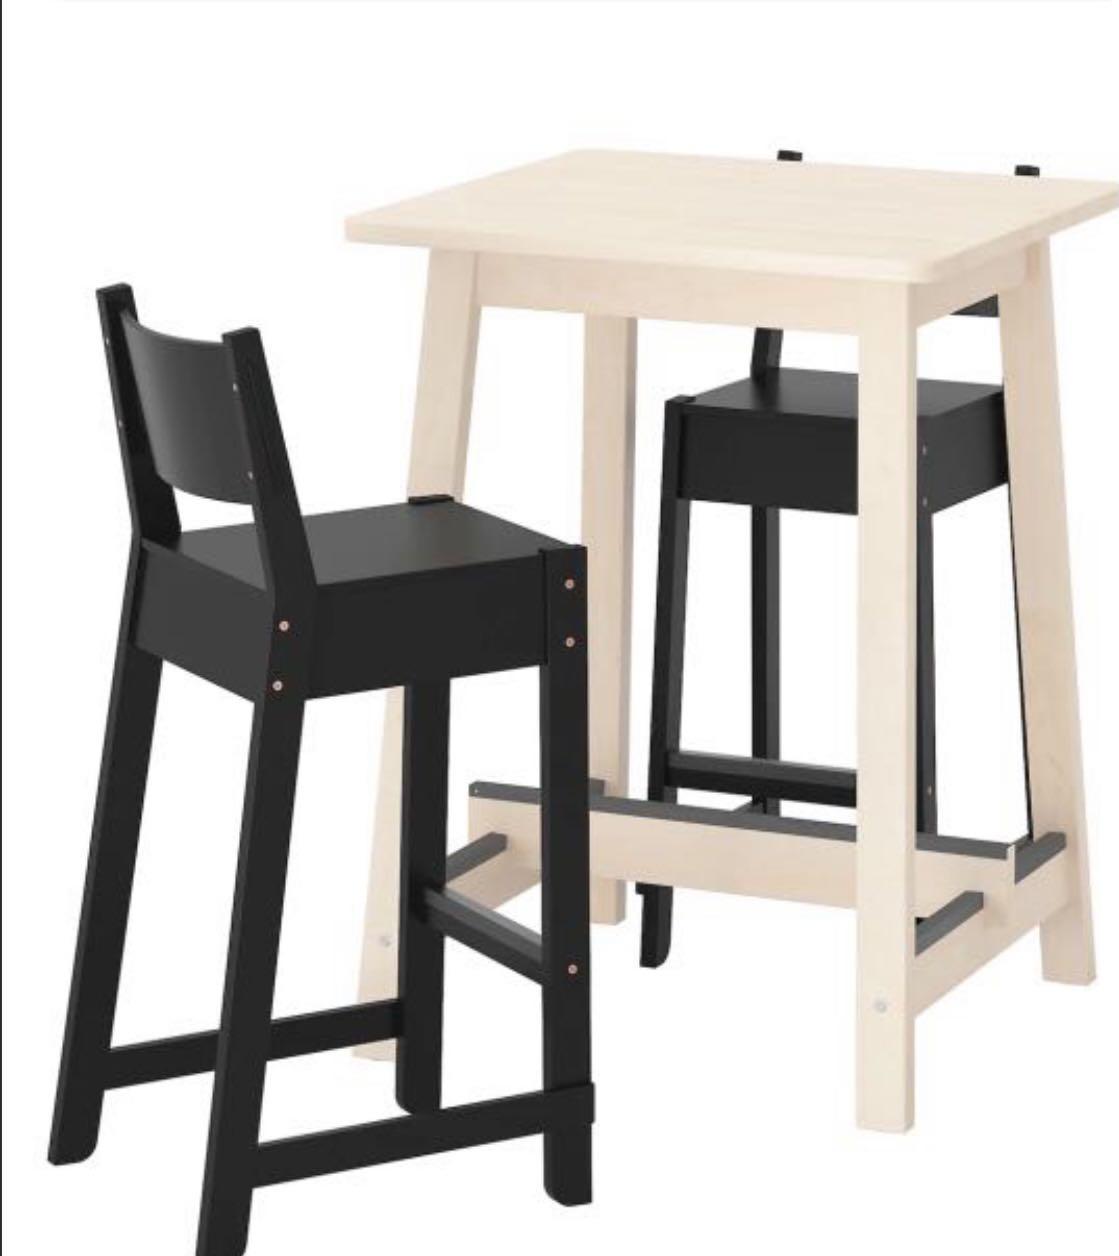 Ikea Dinner Norakker Bar Table Dining Wood High Furniture Set Norraker Bar Table A Set Of Ingolf Chair In White